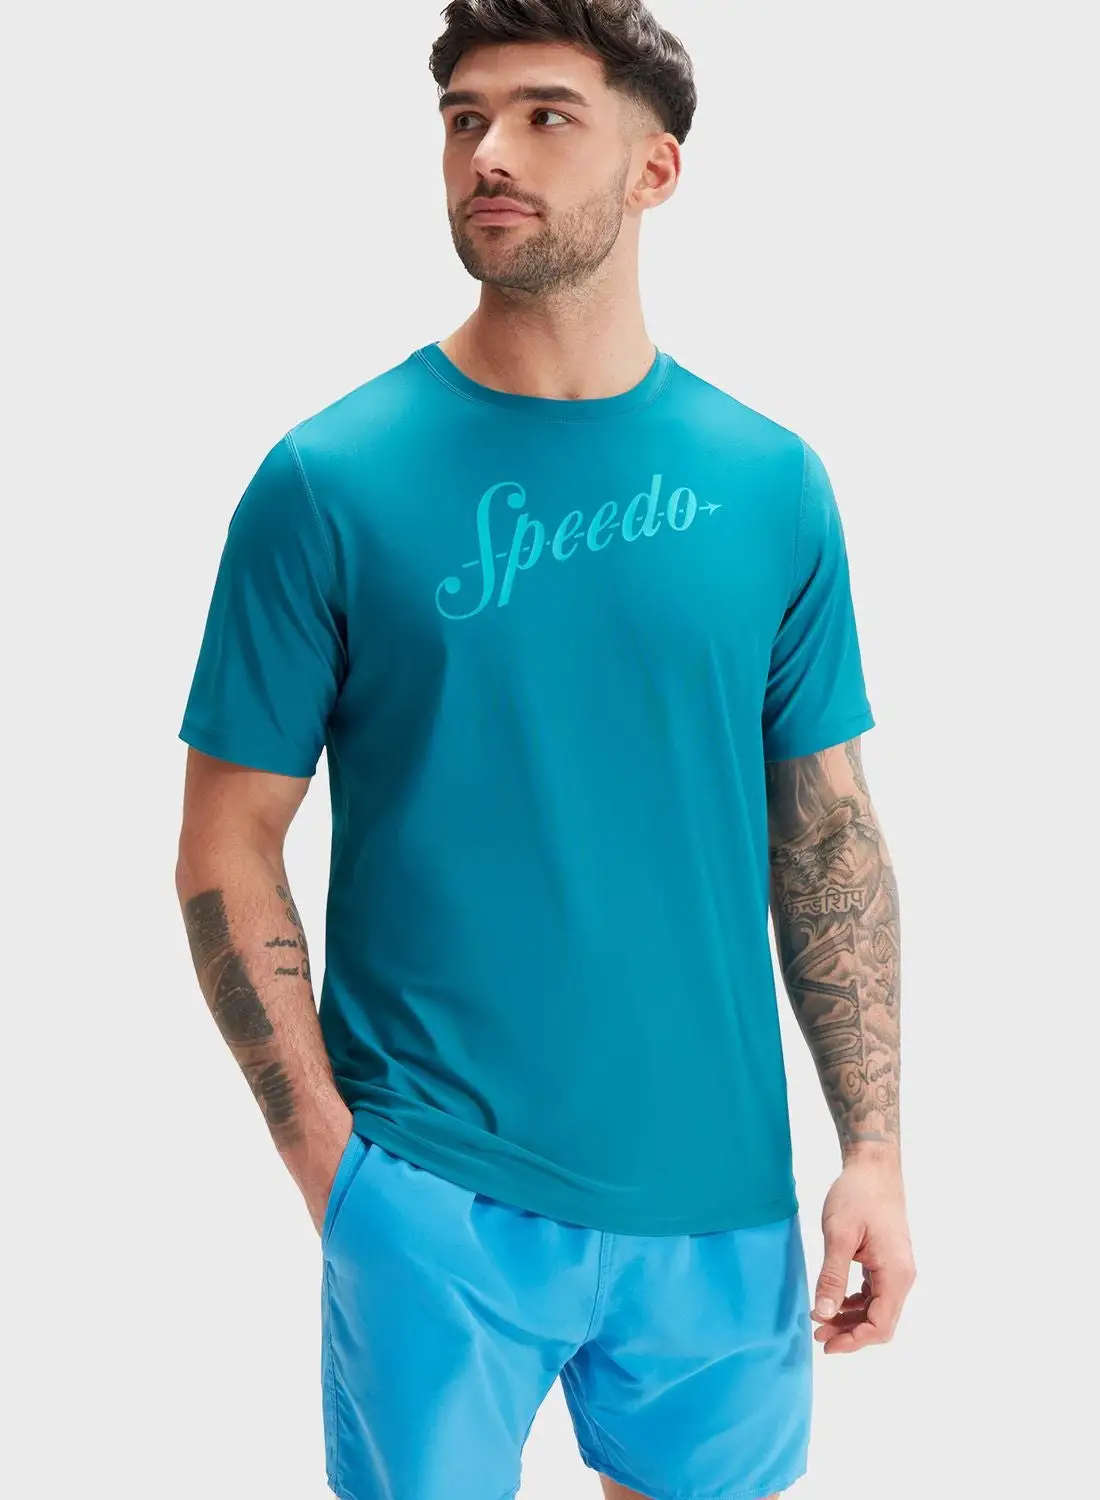 speedo Printed Rash Guard T-Shirt